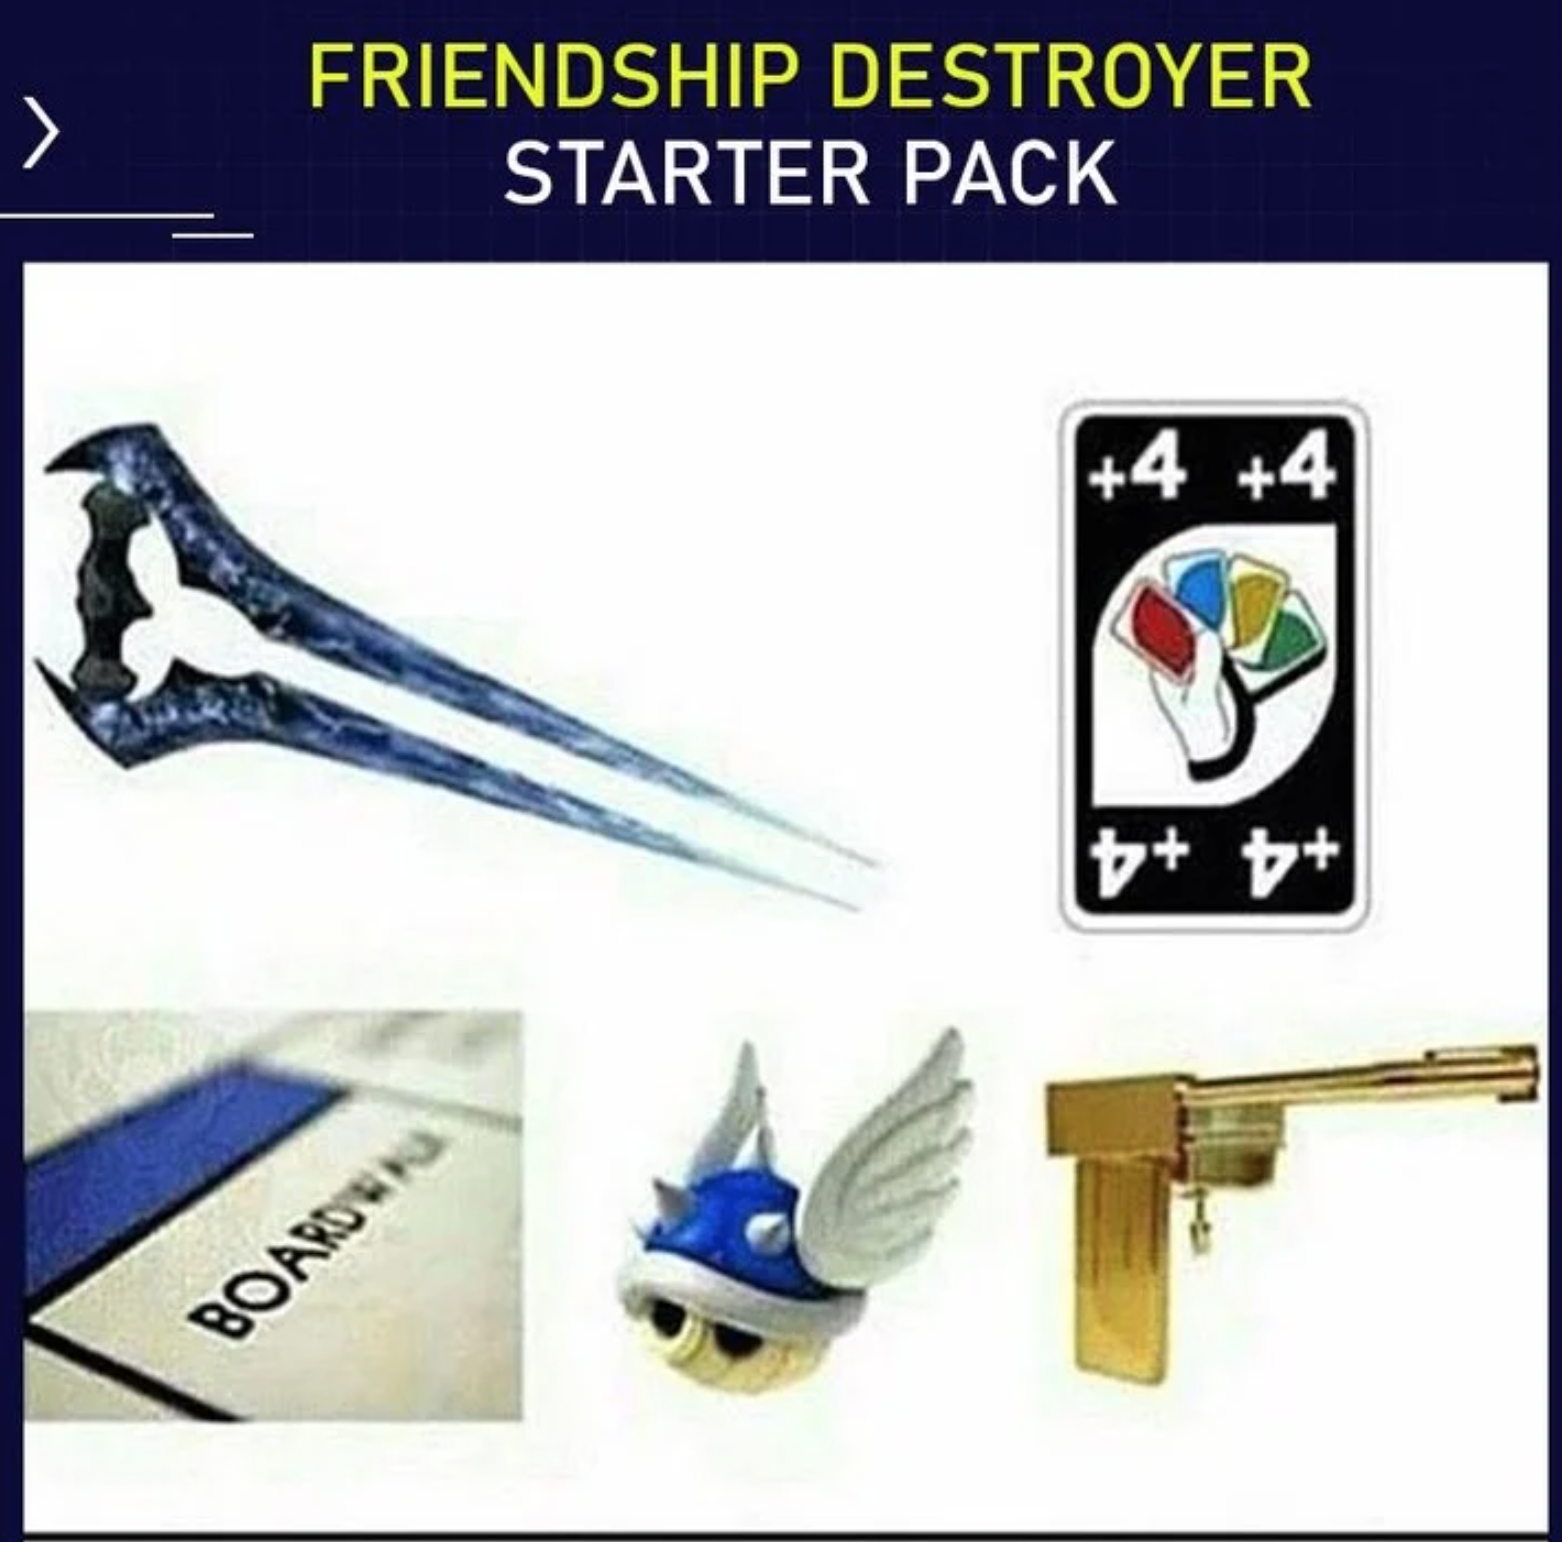 funny gaming memes  - friendship destroyer meme - Friendship Destroyer Starter Pack 4 4| Board